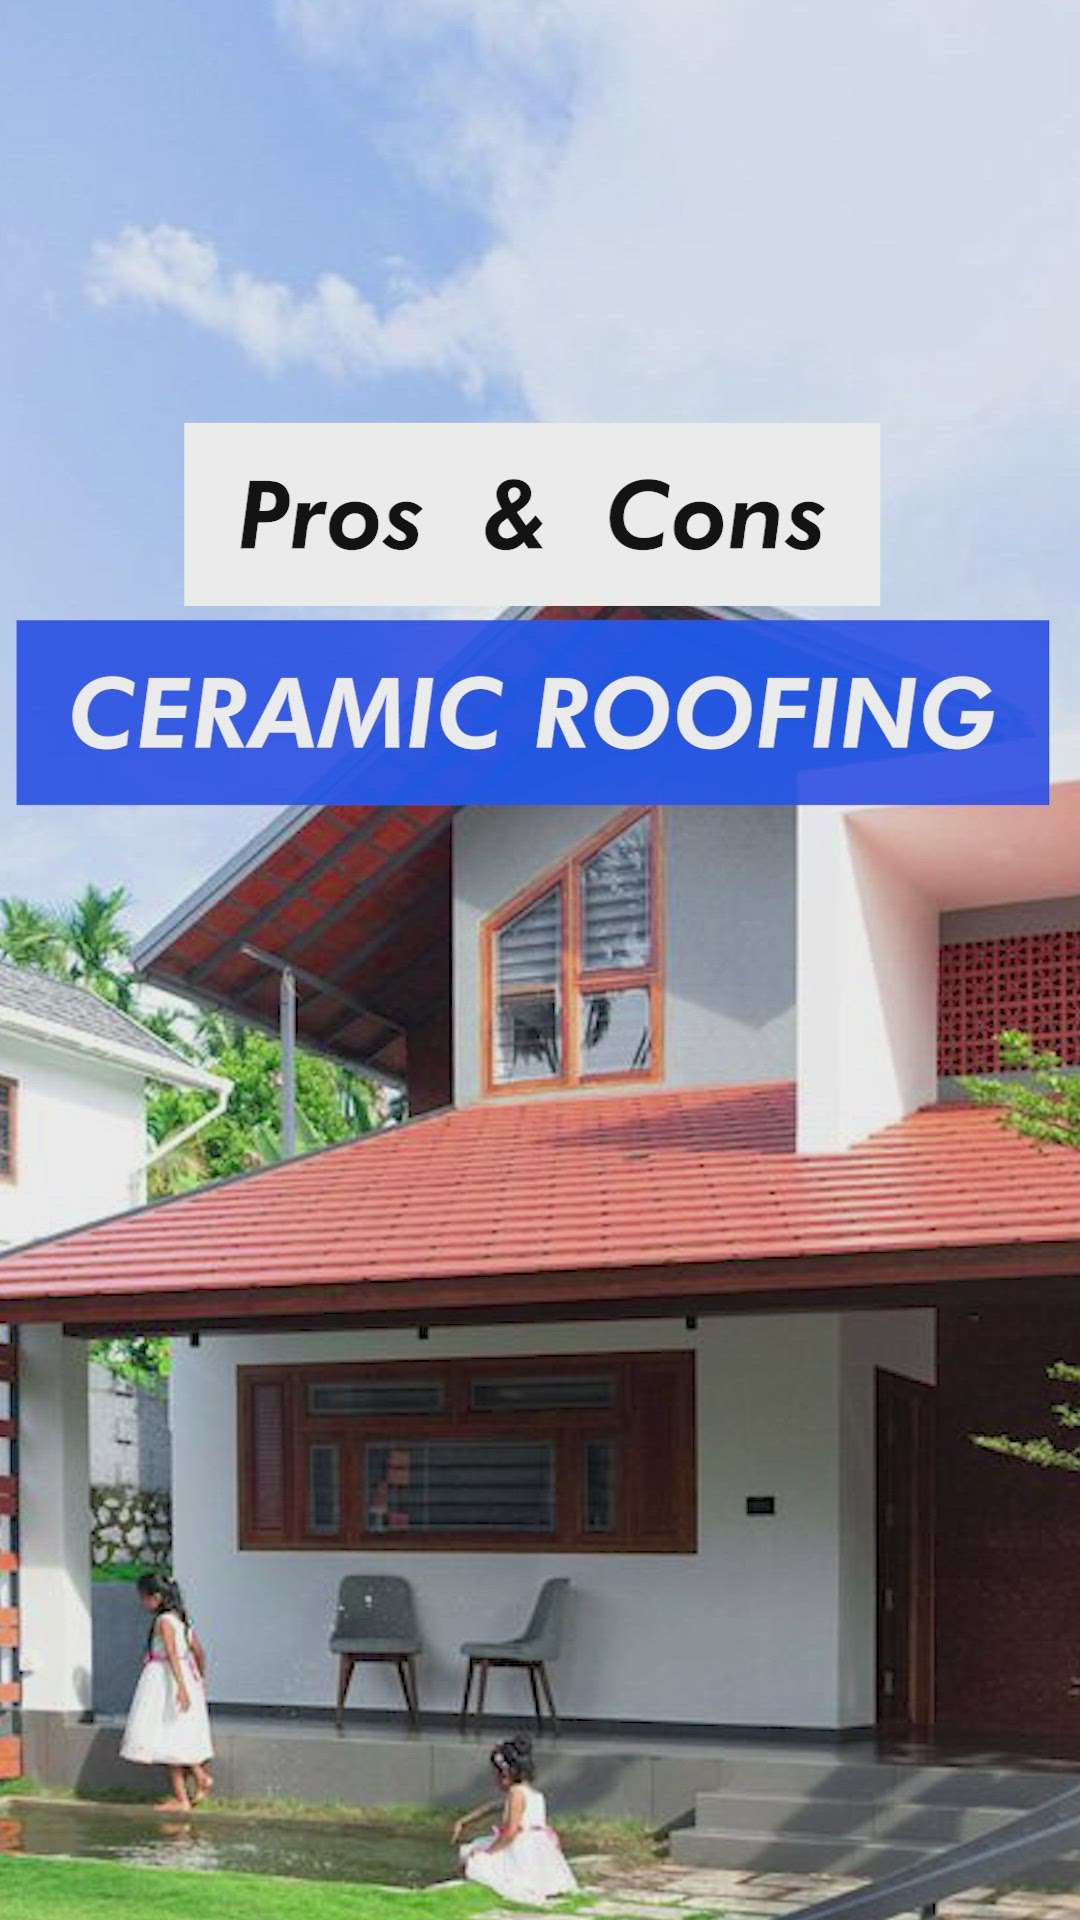 ceramic roofing ഗുണവും ദോഷവും  #creatorsofkolo  #Kannur  #kpg  #roofing #architectjanissony
kpg roofing tile
https://koloapp.in/feeds/1663155430?title=KPG
https://koloapp.in/feeds/1663155430?title=KPG